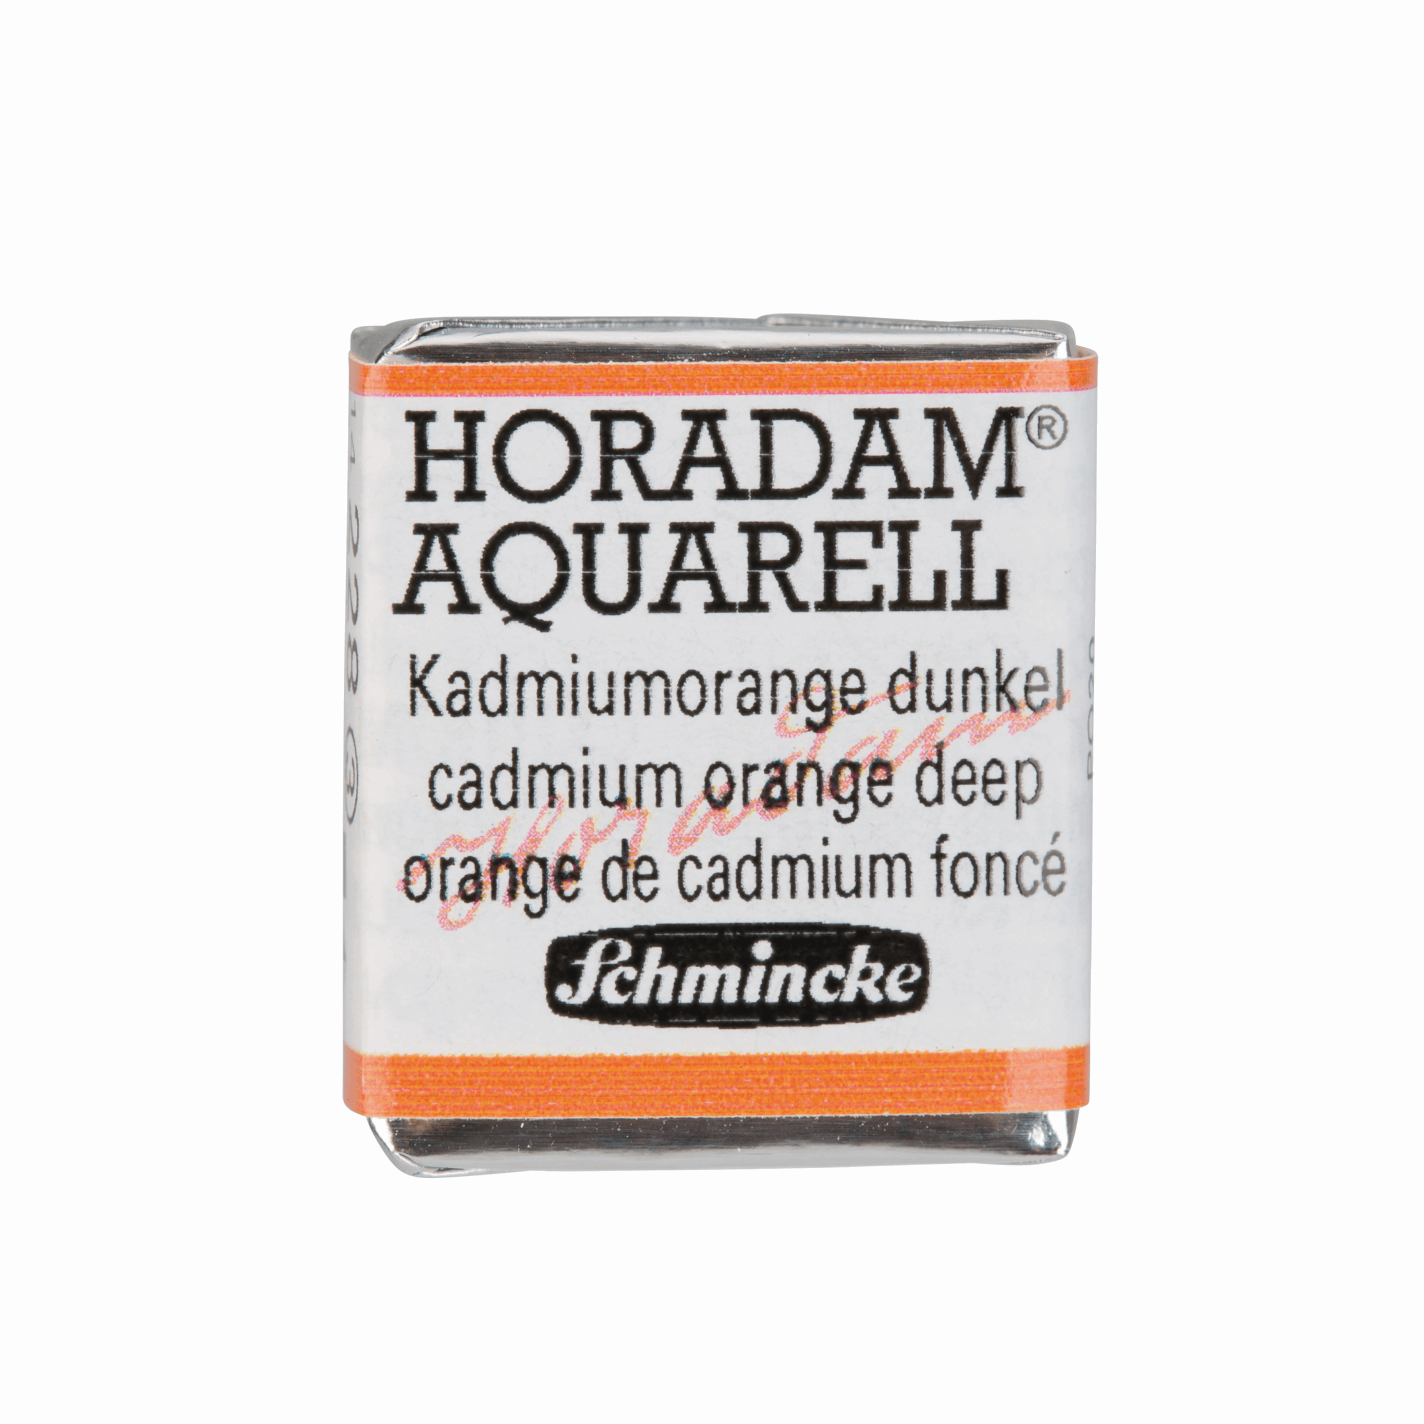 Schmincke Horadam Aquarell pans 1/2 pan Cadmium Orange Deep